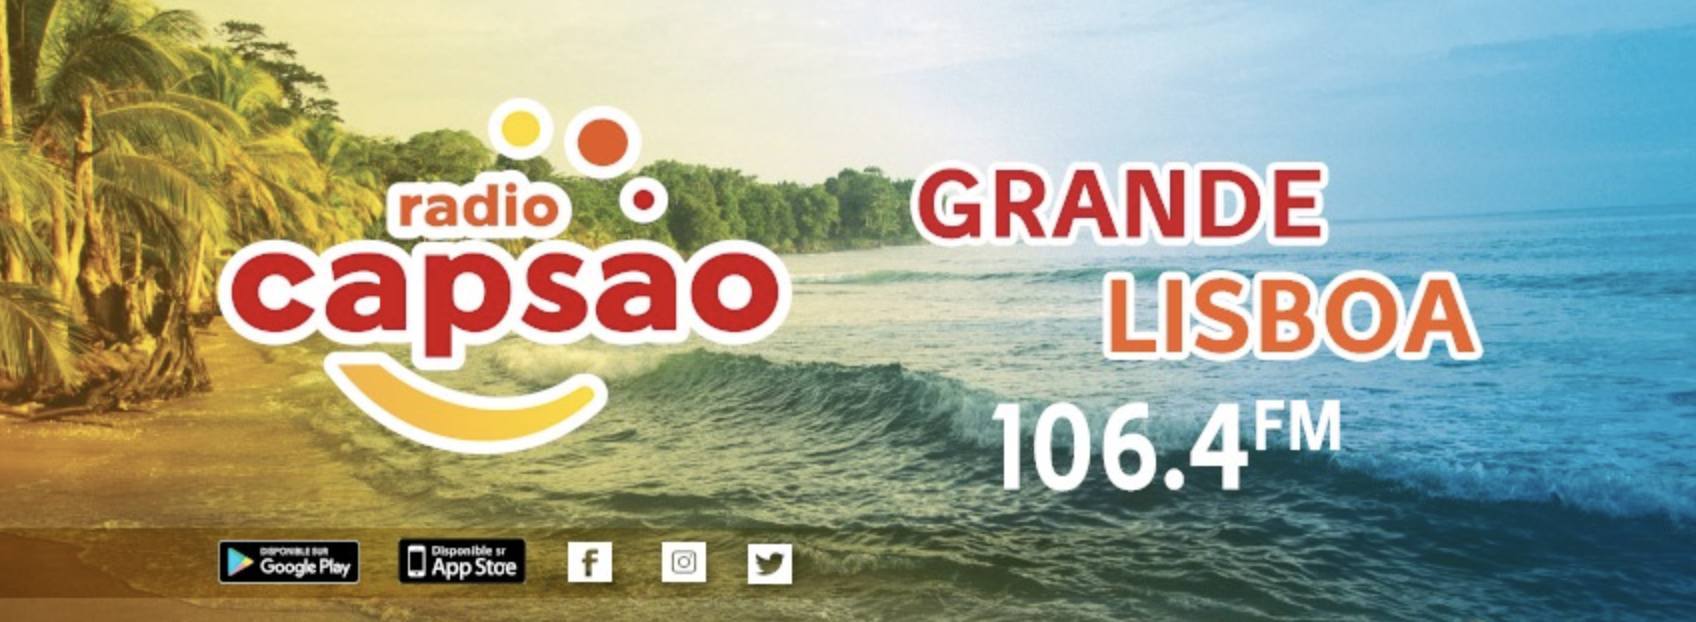 Radio Capsao s'offre une fréquence au Portugal